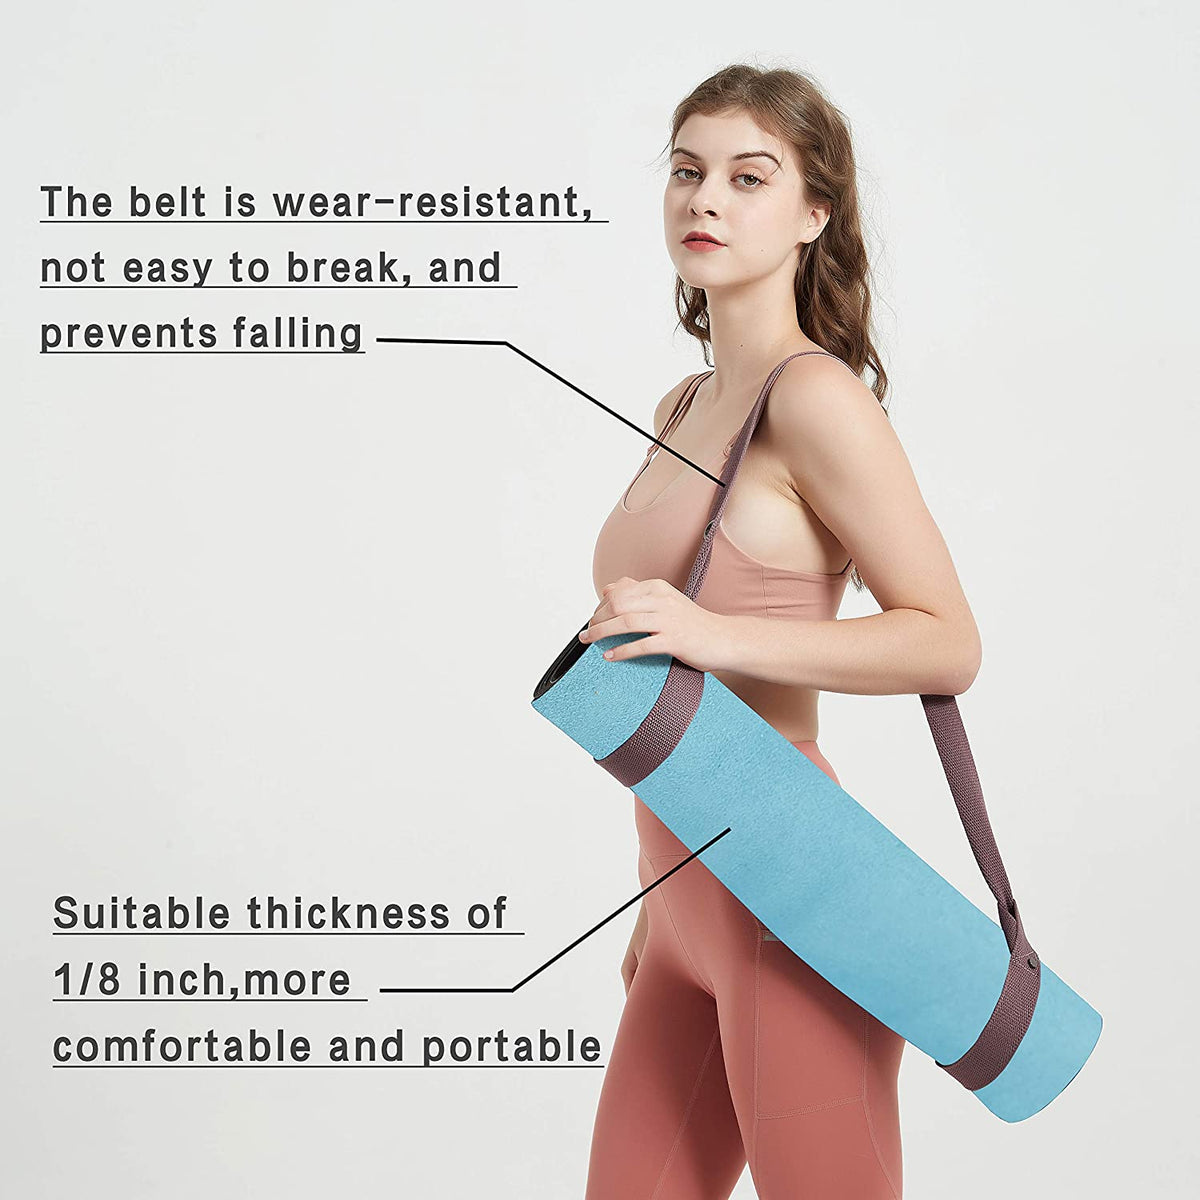 Breathe Yoga Mat (PM814-BRE) from Elysian : Hypoallergenic Yoga